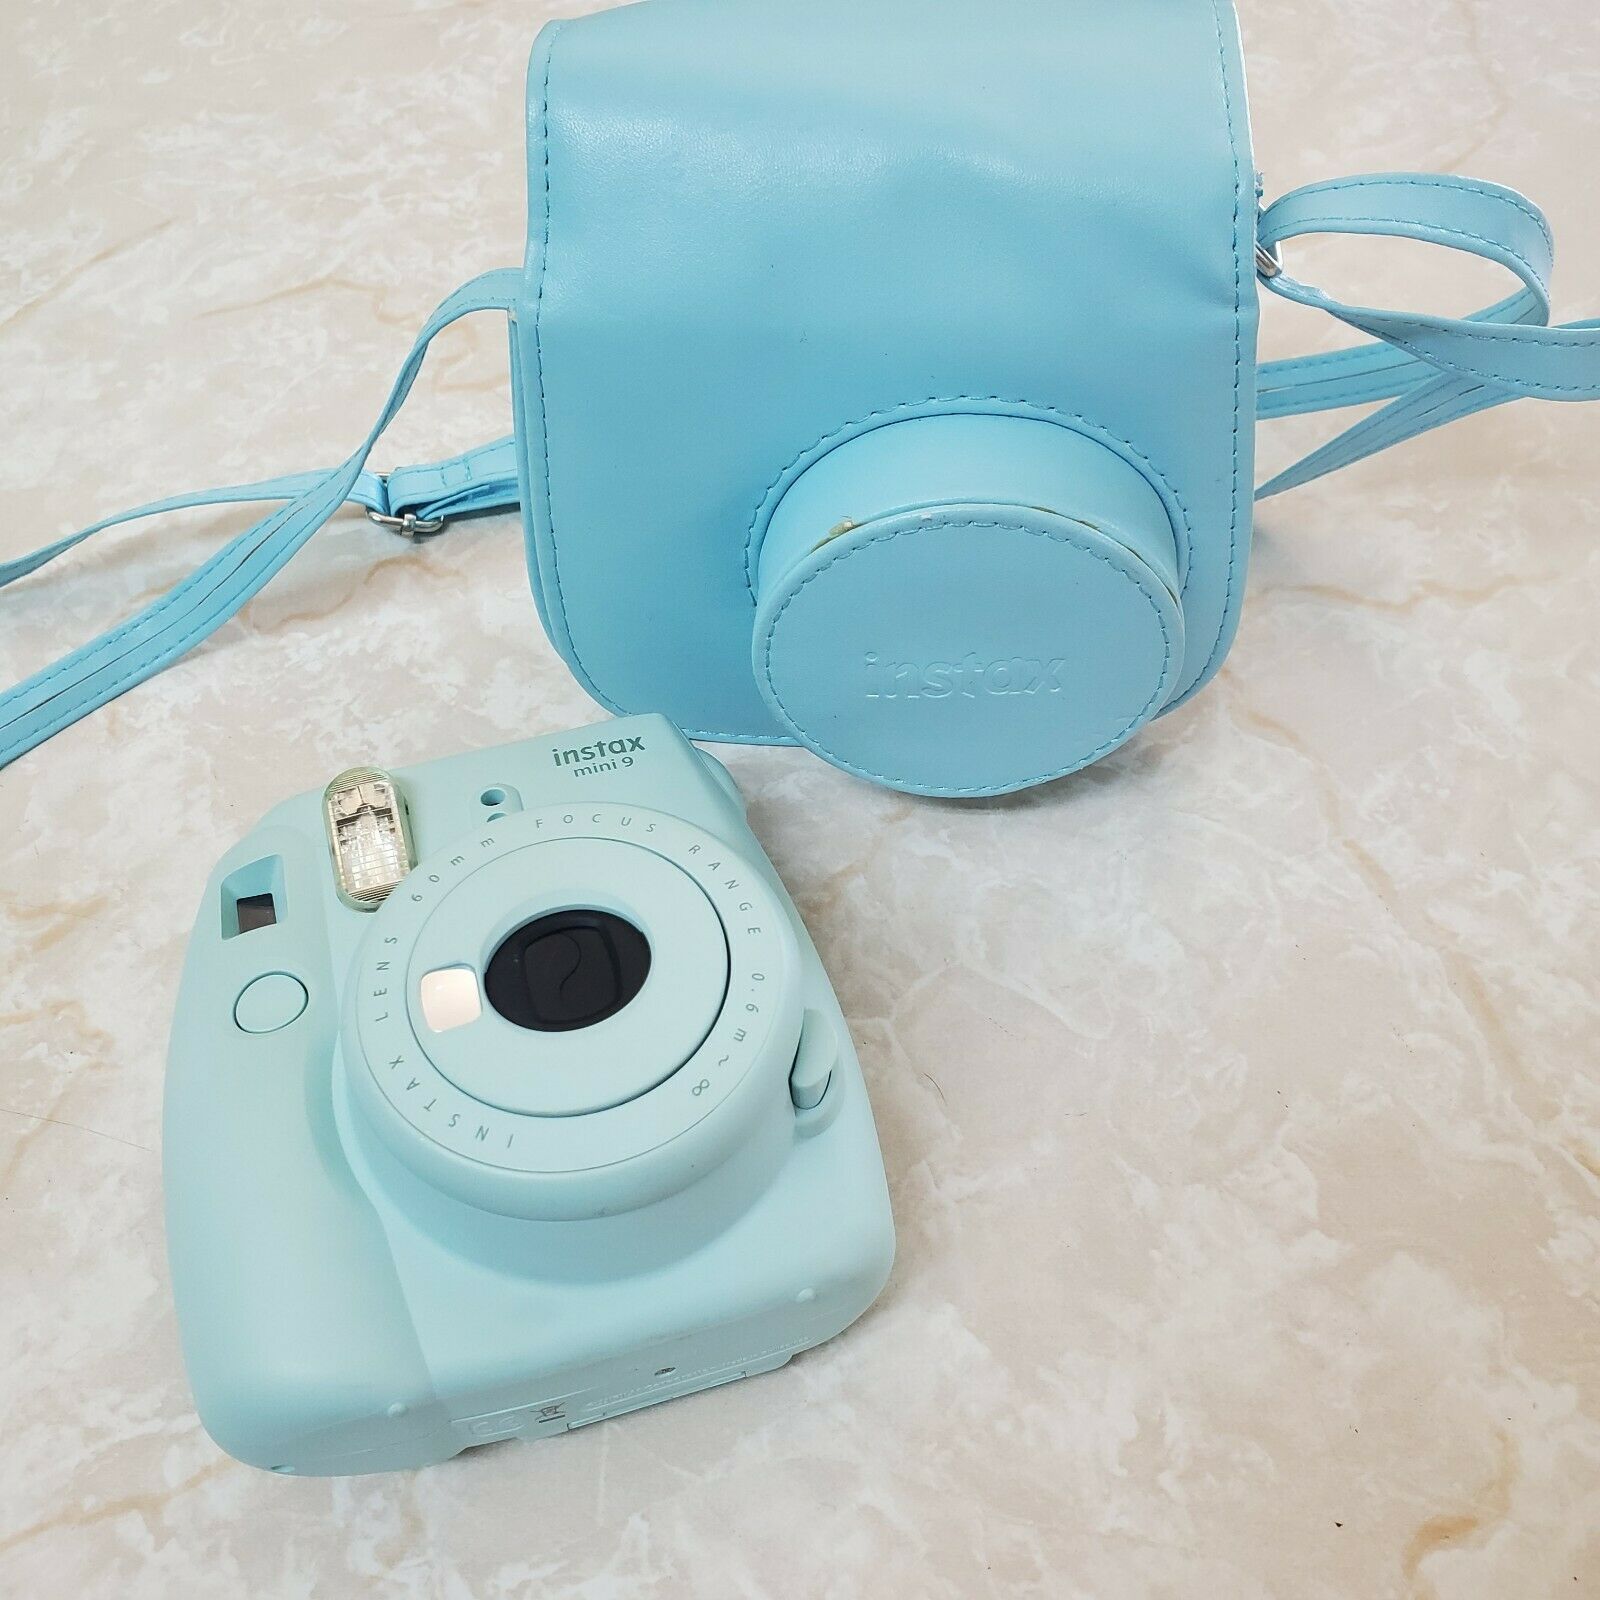 Fujifilm Instax Mini 9 Instant Film Camera + Carrying Case Light Blue Tested